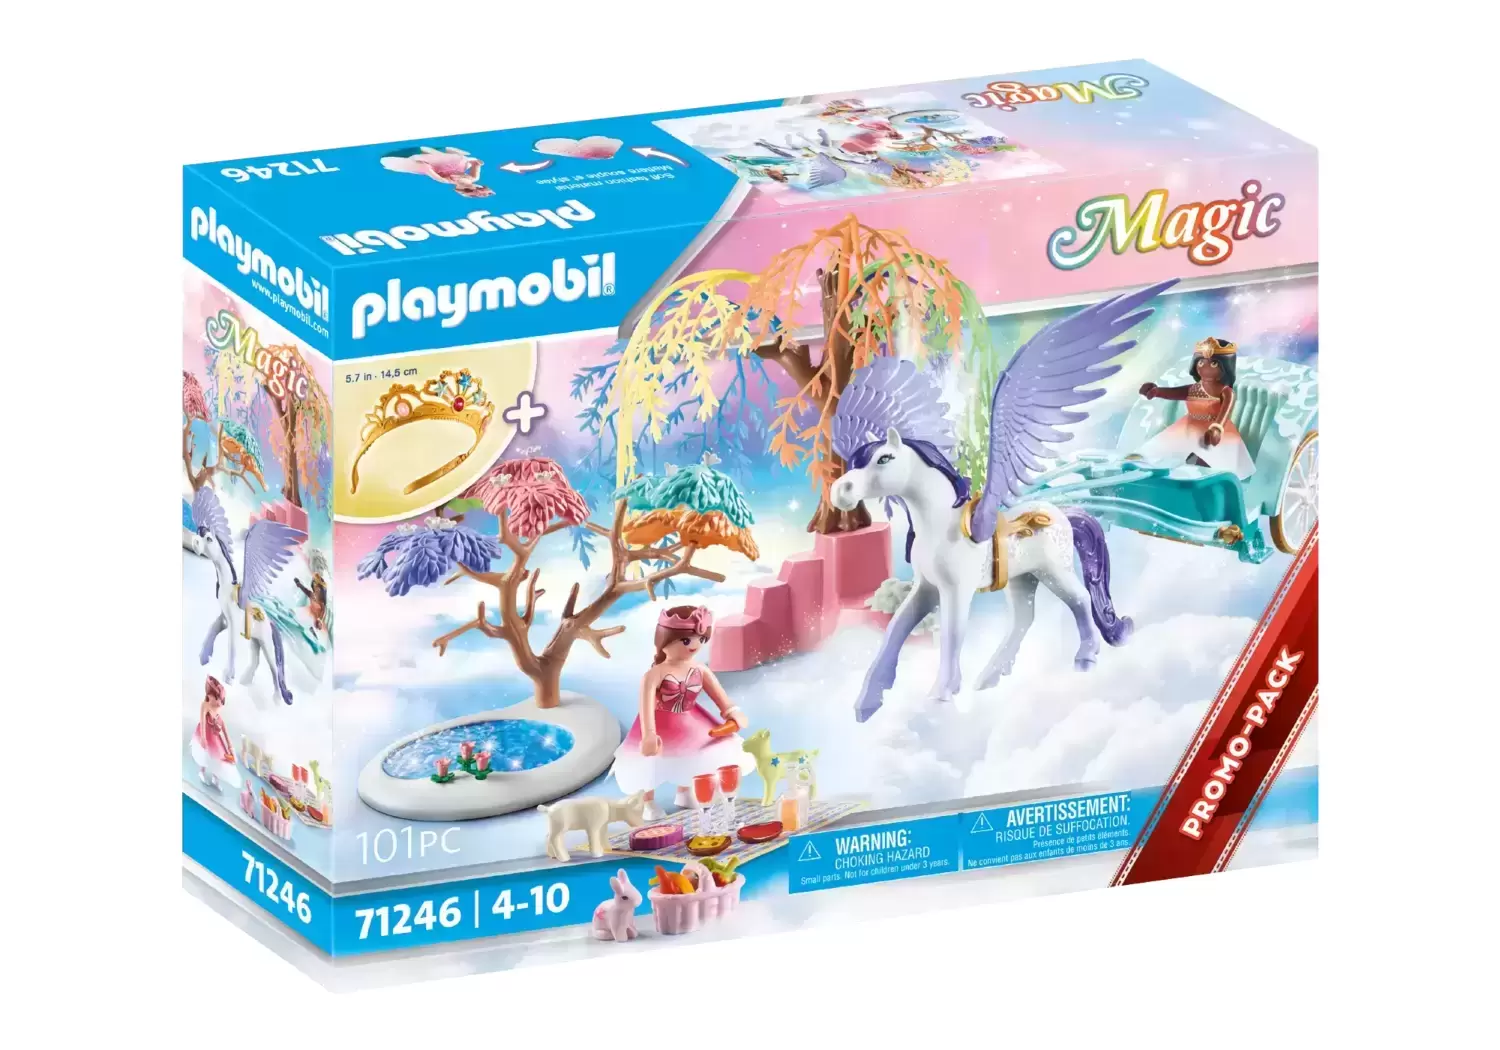 Playmobil Fairies - Picnic with Pegasus Carriage